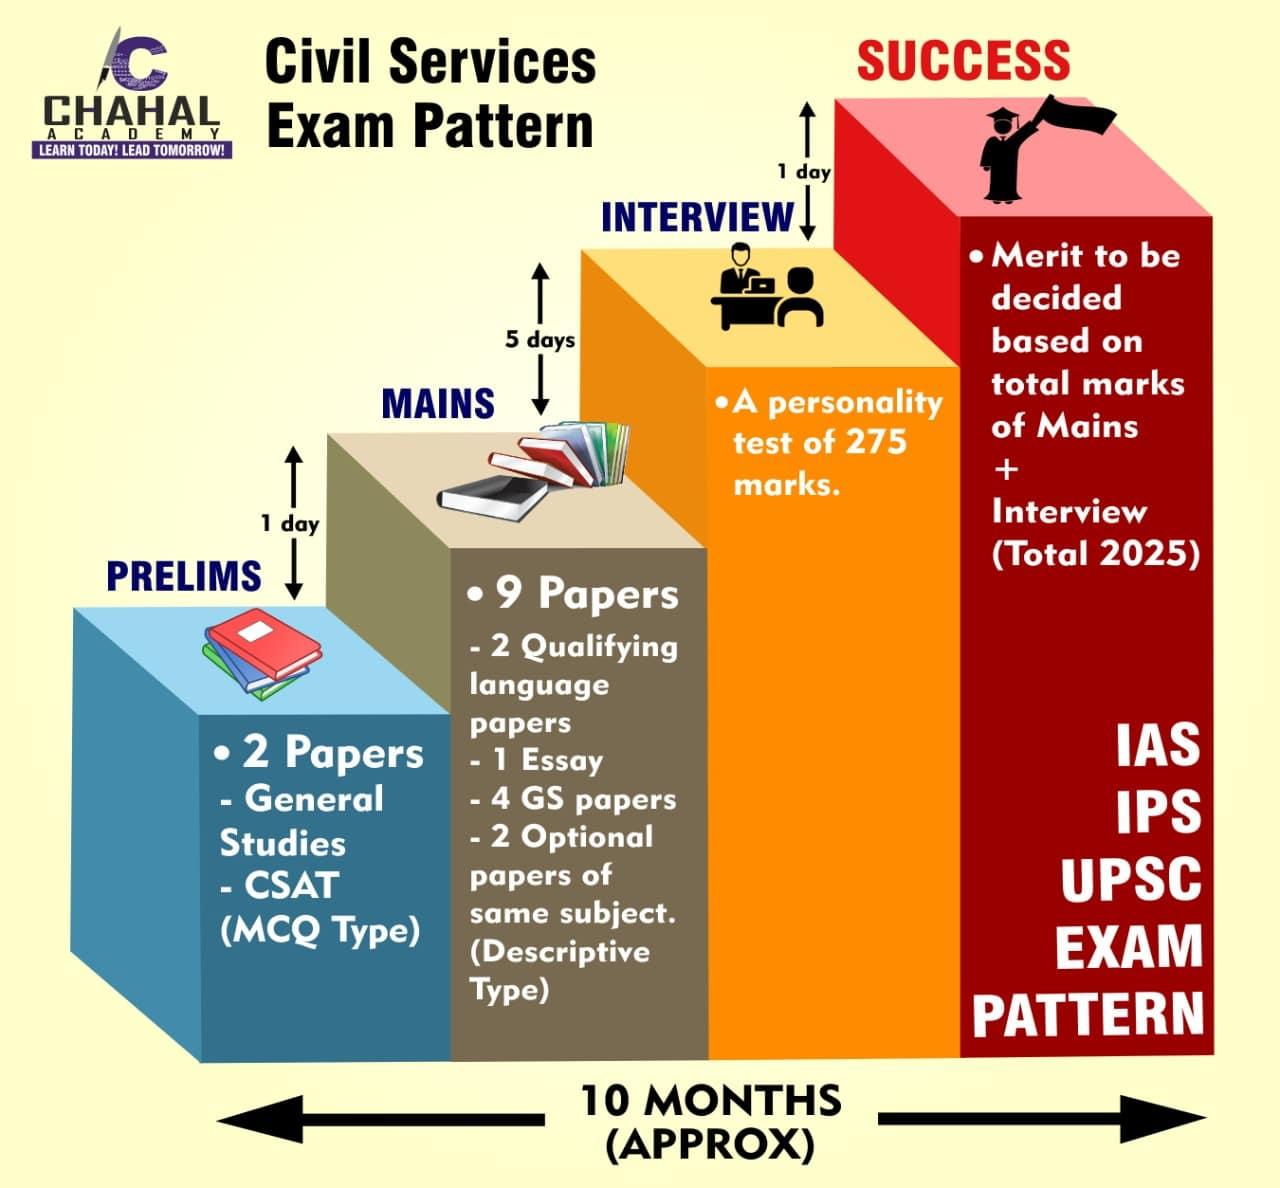 UPSC Civil Services Exam Pattern| IAS, IPS, IFS Exam Pattern and ...